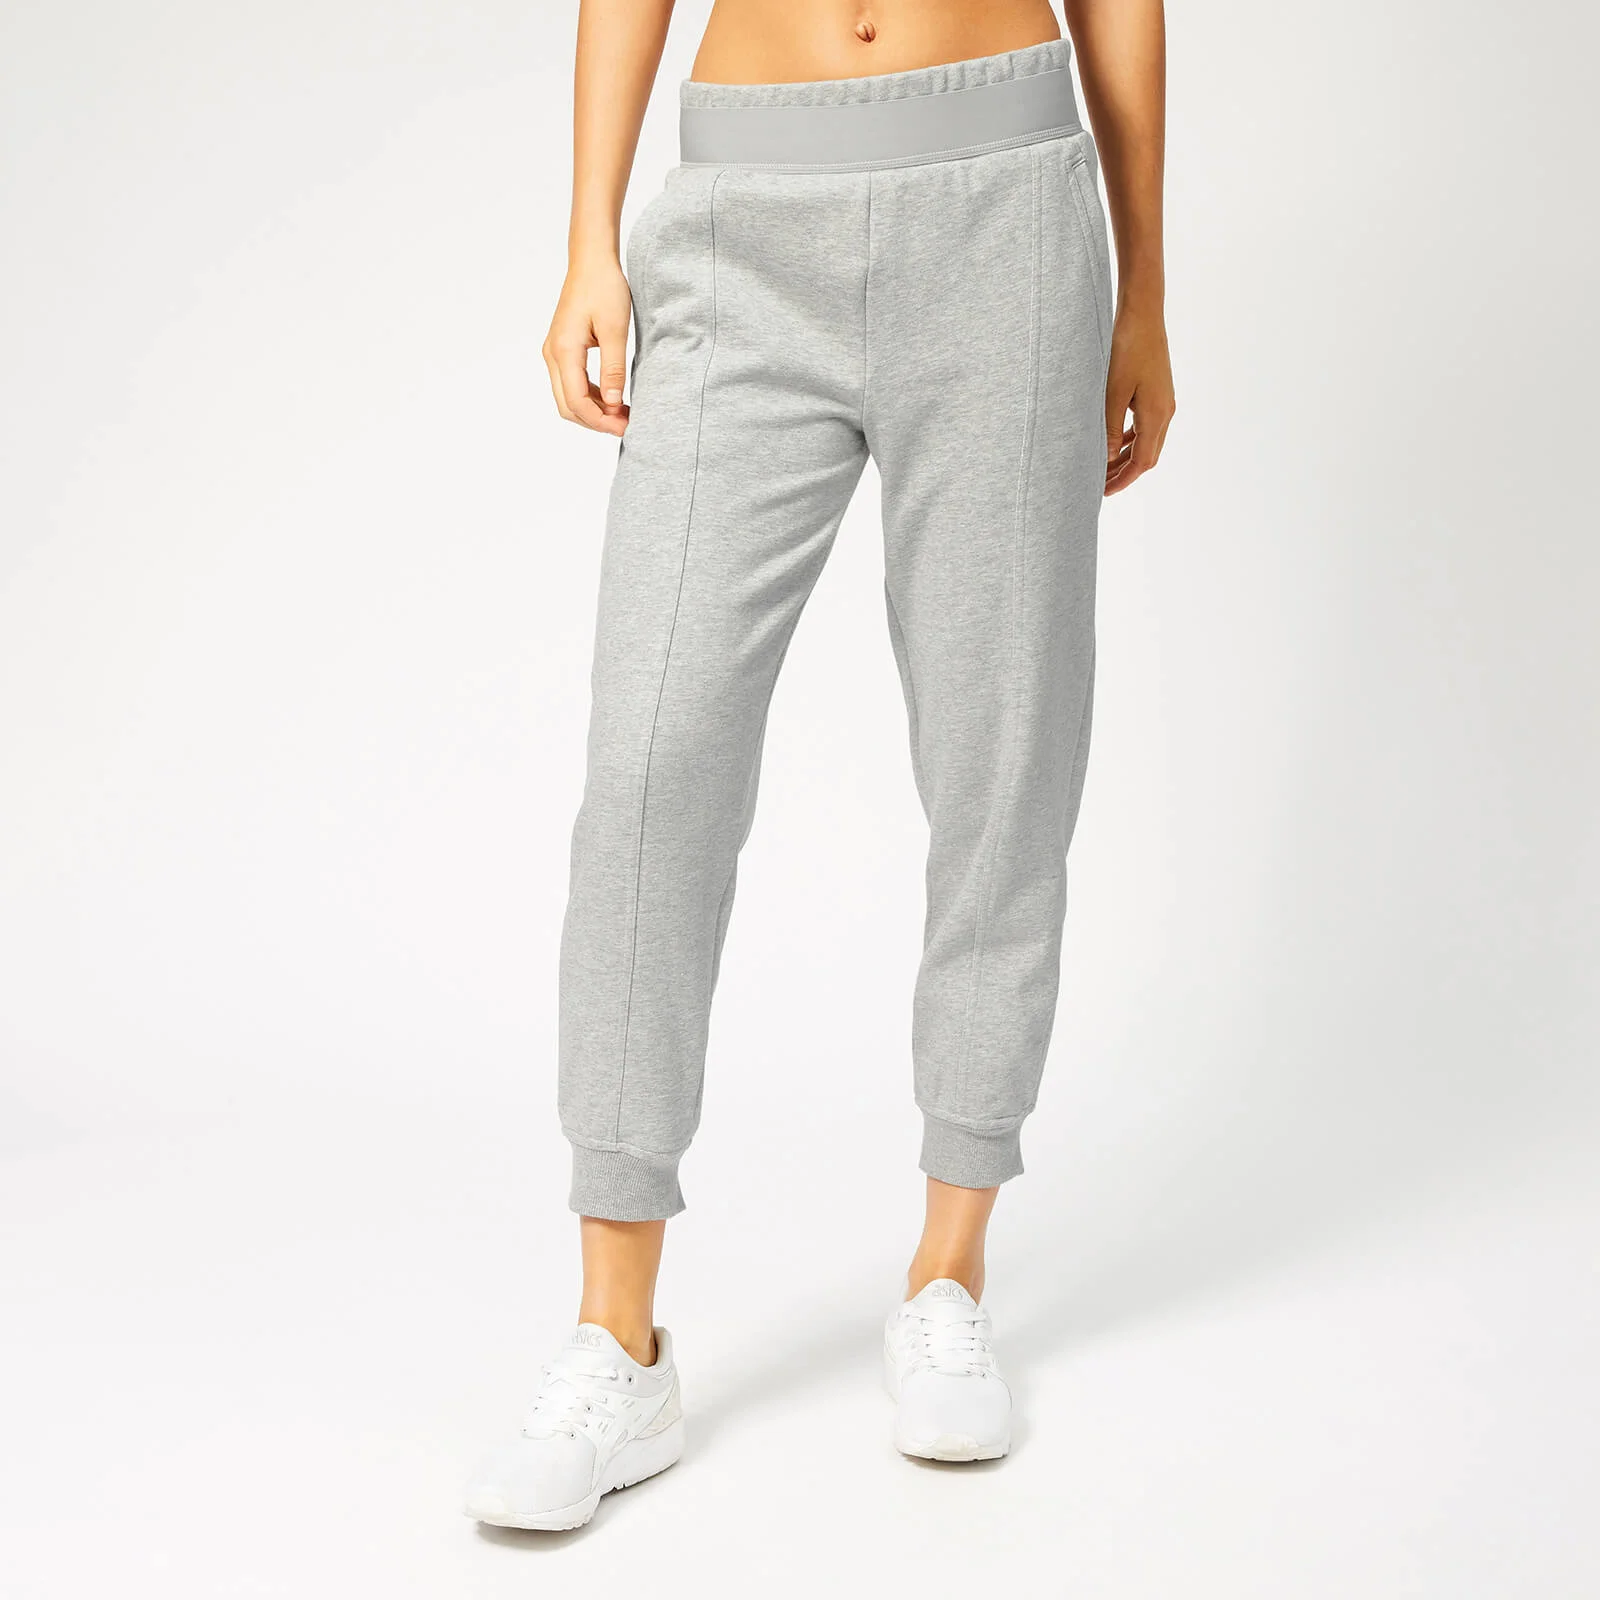 adidas by Stella McCartney Women's Essential Sweatpants - Medium Grey Heather Image 1